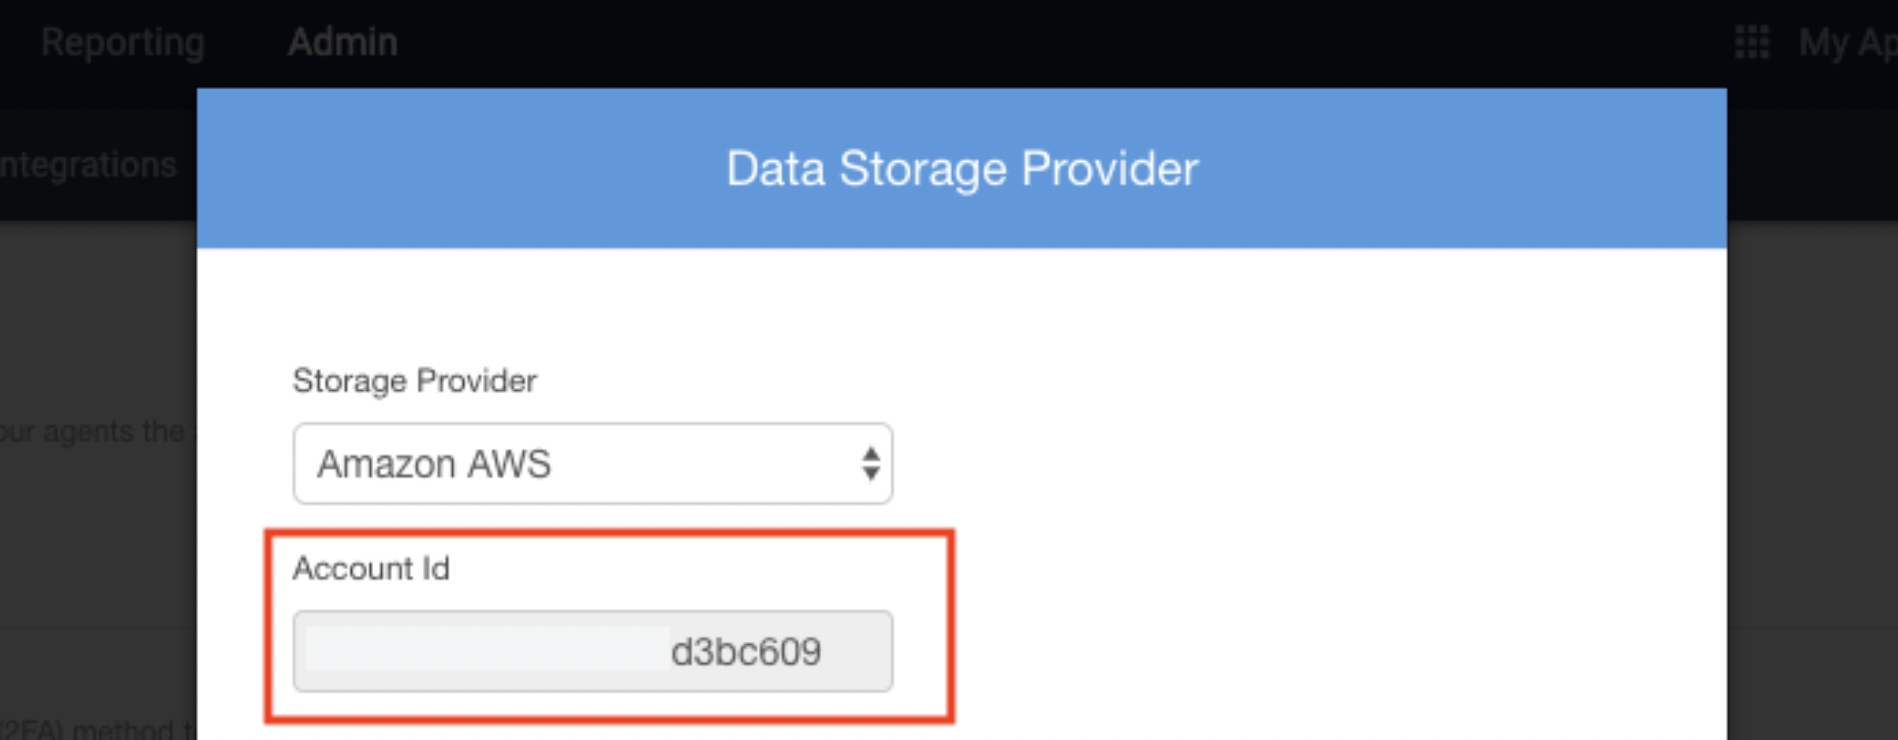 data_storage_provider.png